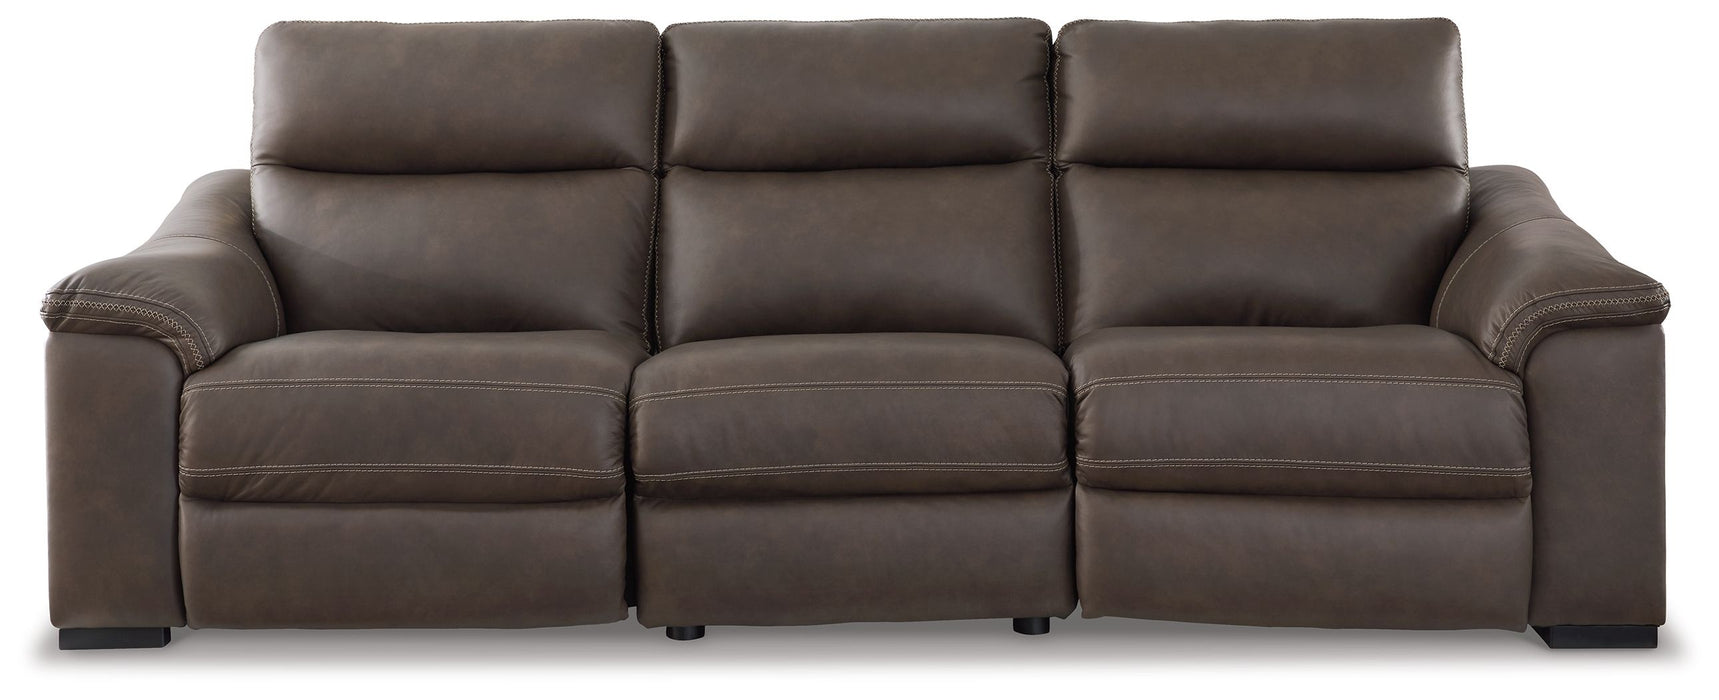 Salvatore - Chocolate - Power Reclining Sofa 3 Pc Sectional Capital Discount Furniture Home Furniture, Furniture Store